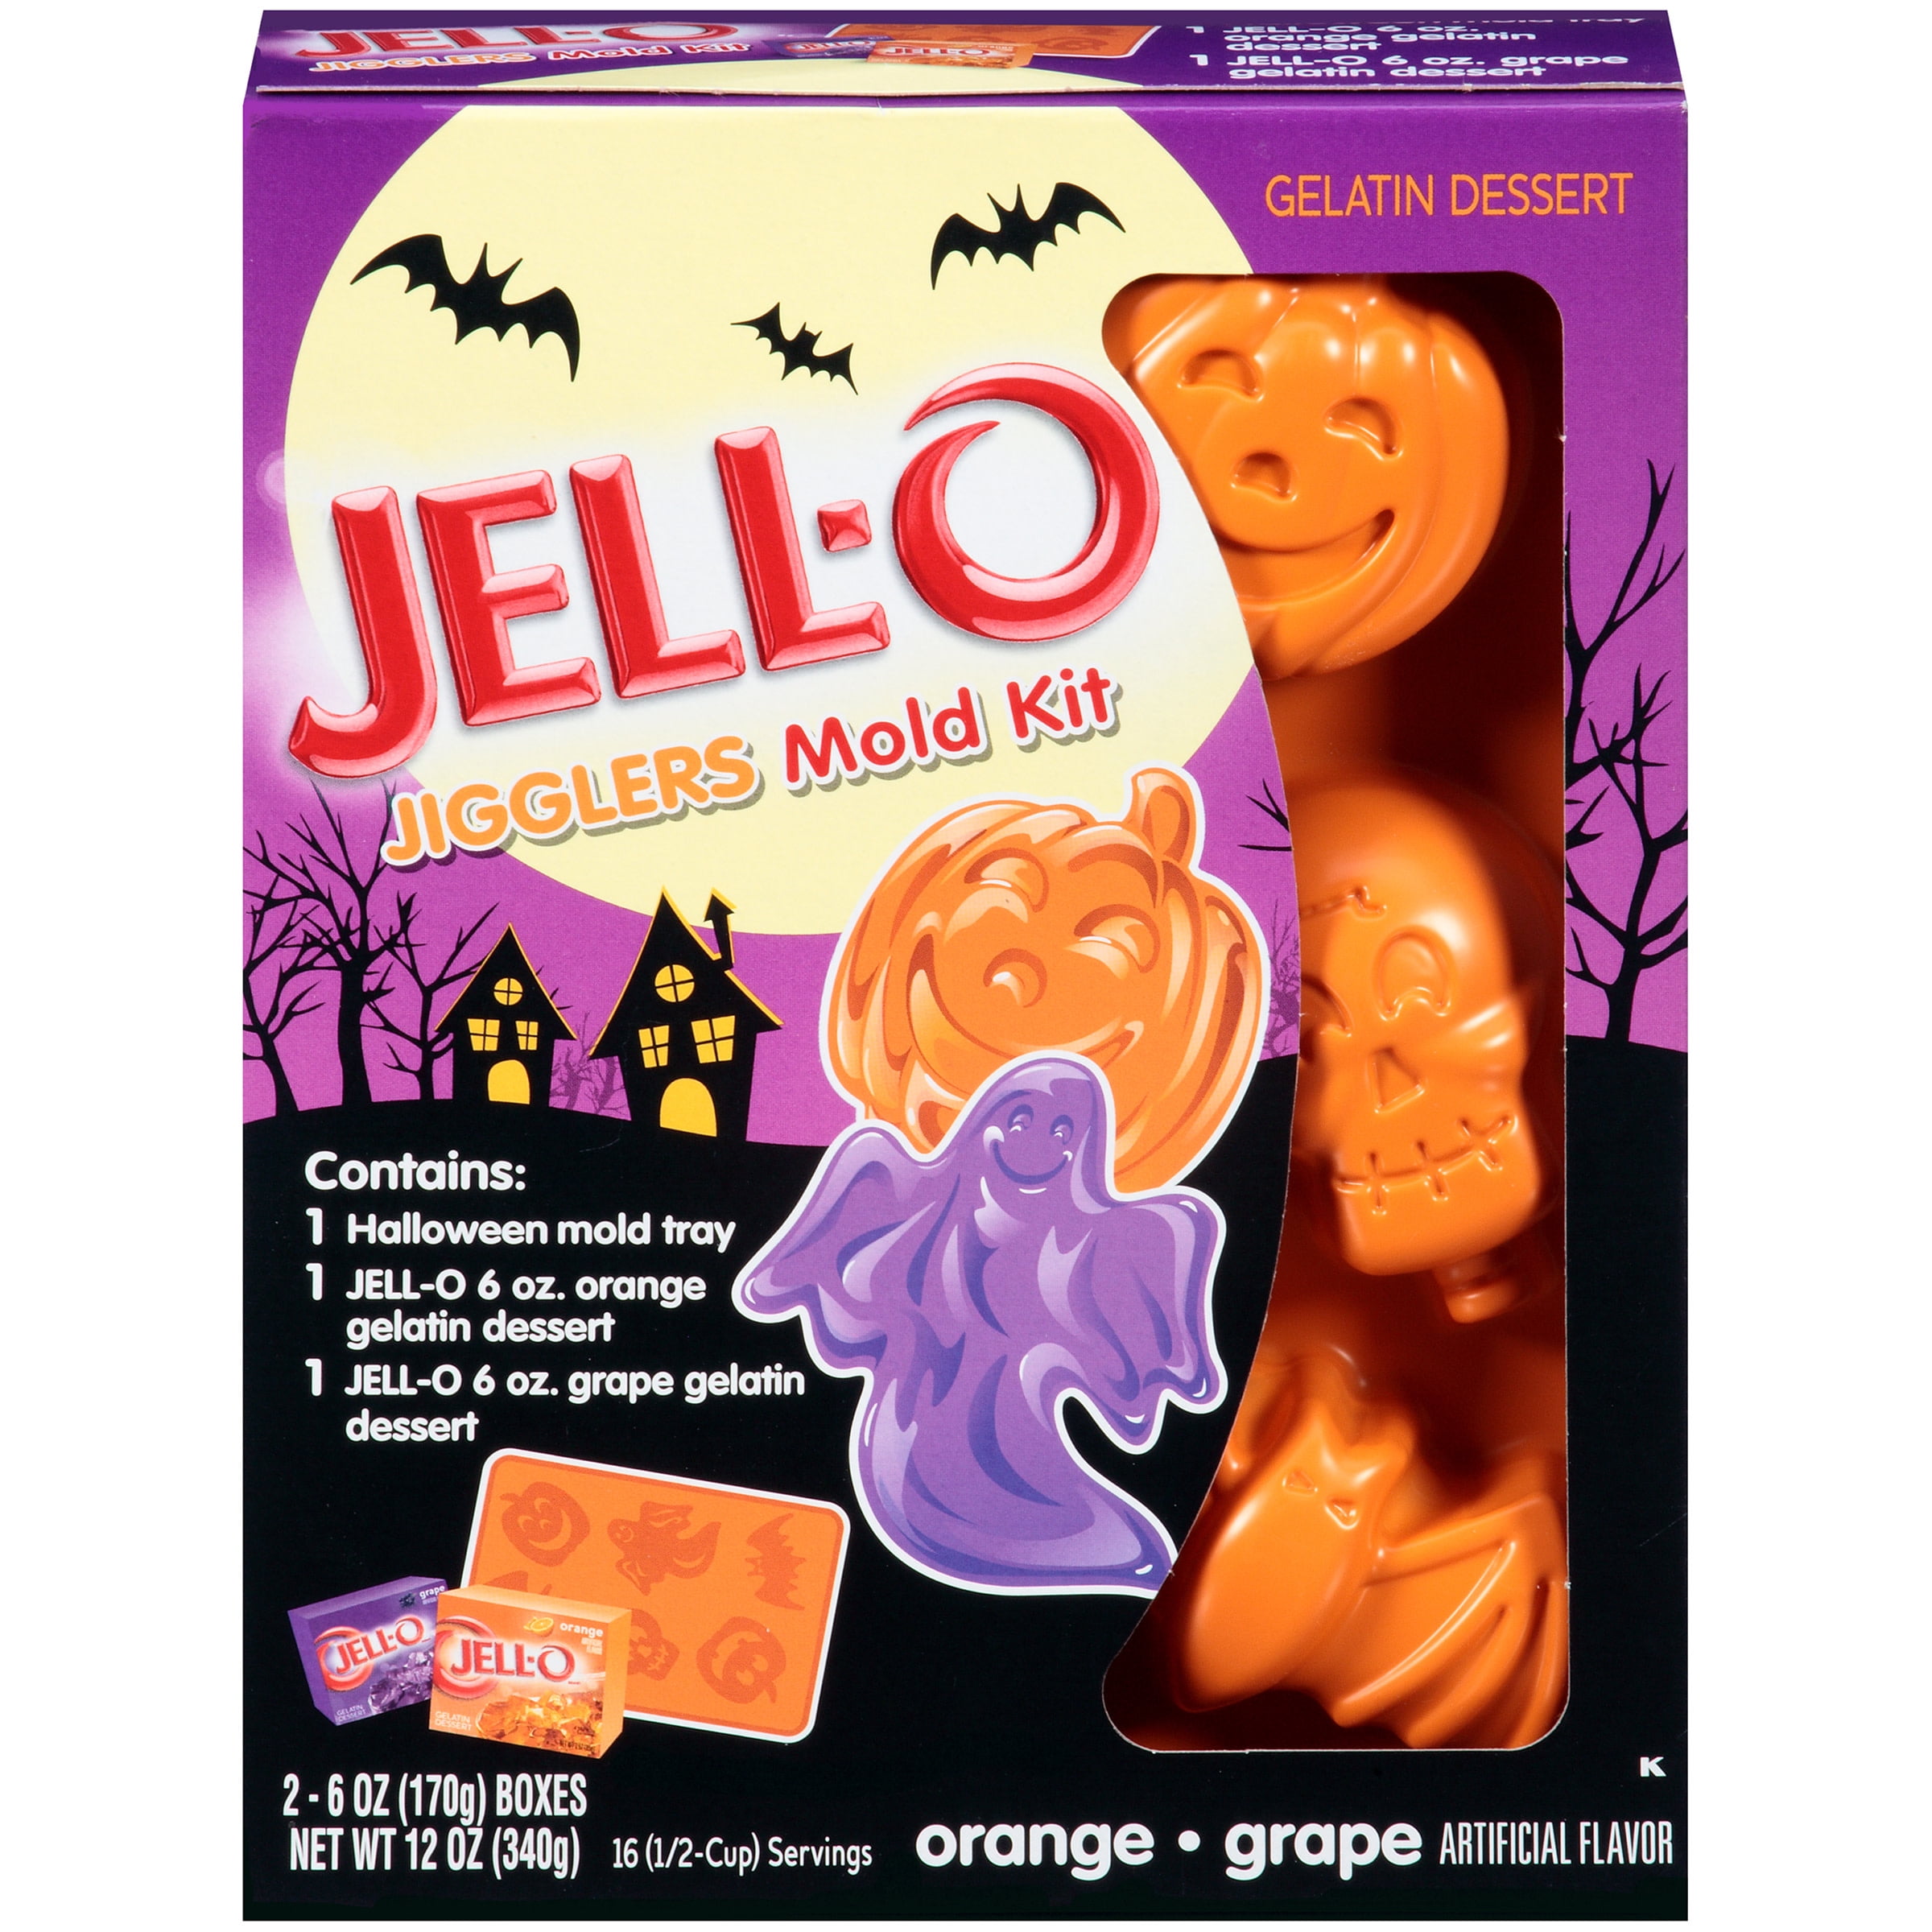 Jell-O Jigglers Berry Blue & Lemon Zoo Mold Kit, Jello & Pudding Mix